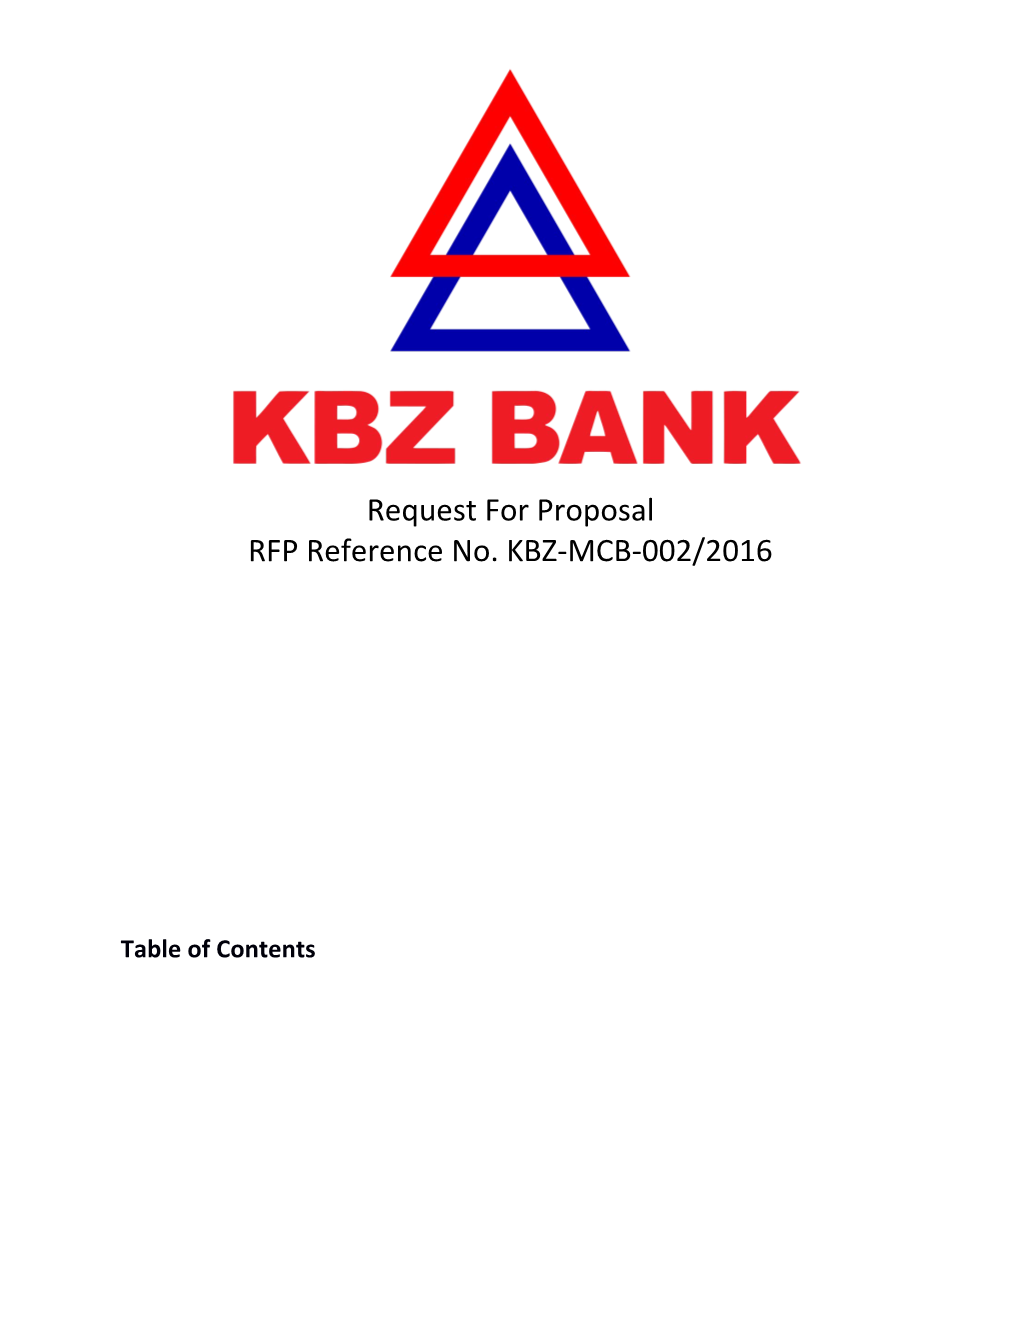 RFP Reference No. KBZ-MCB-002/2016